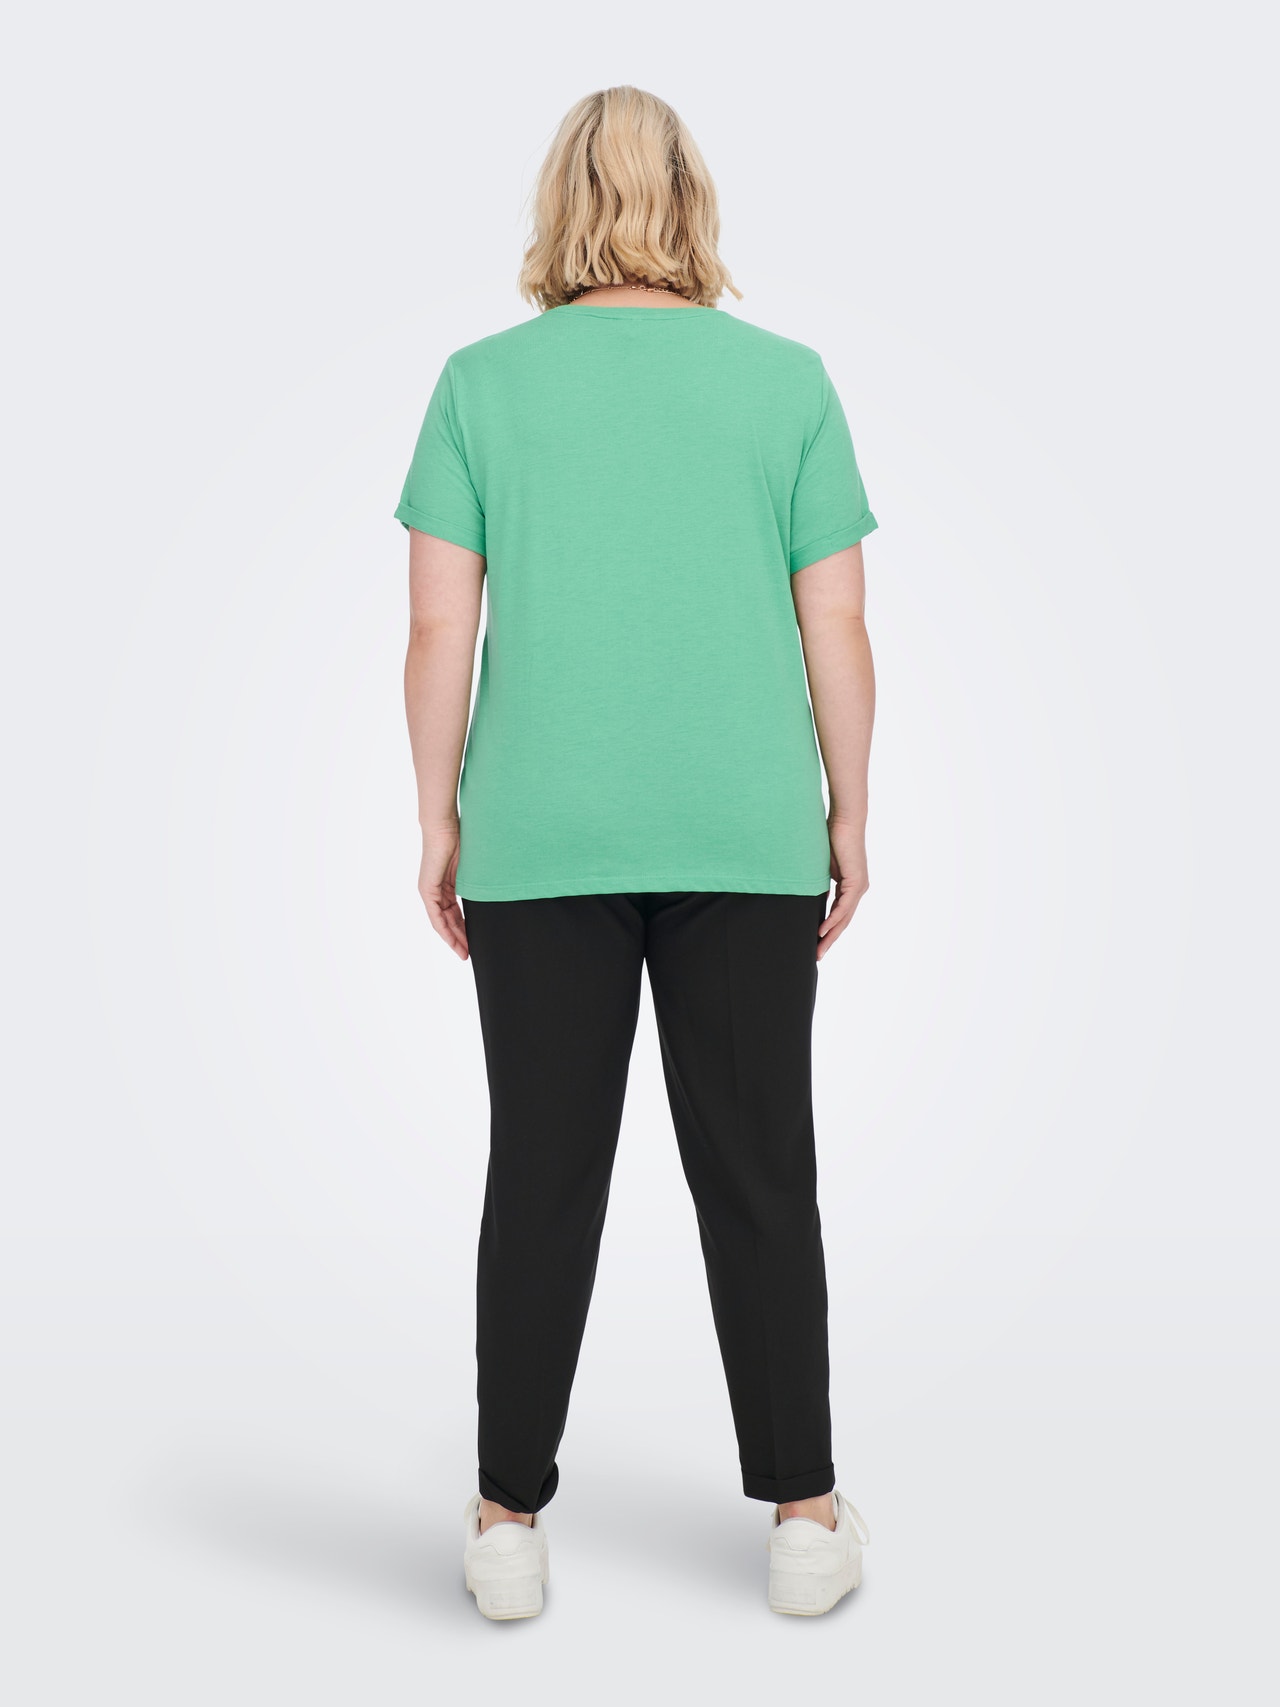 ONLY Curvy o-neck t-shirt -Winter Green - 15251650